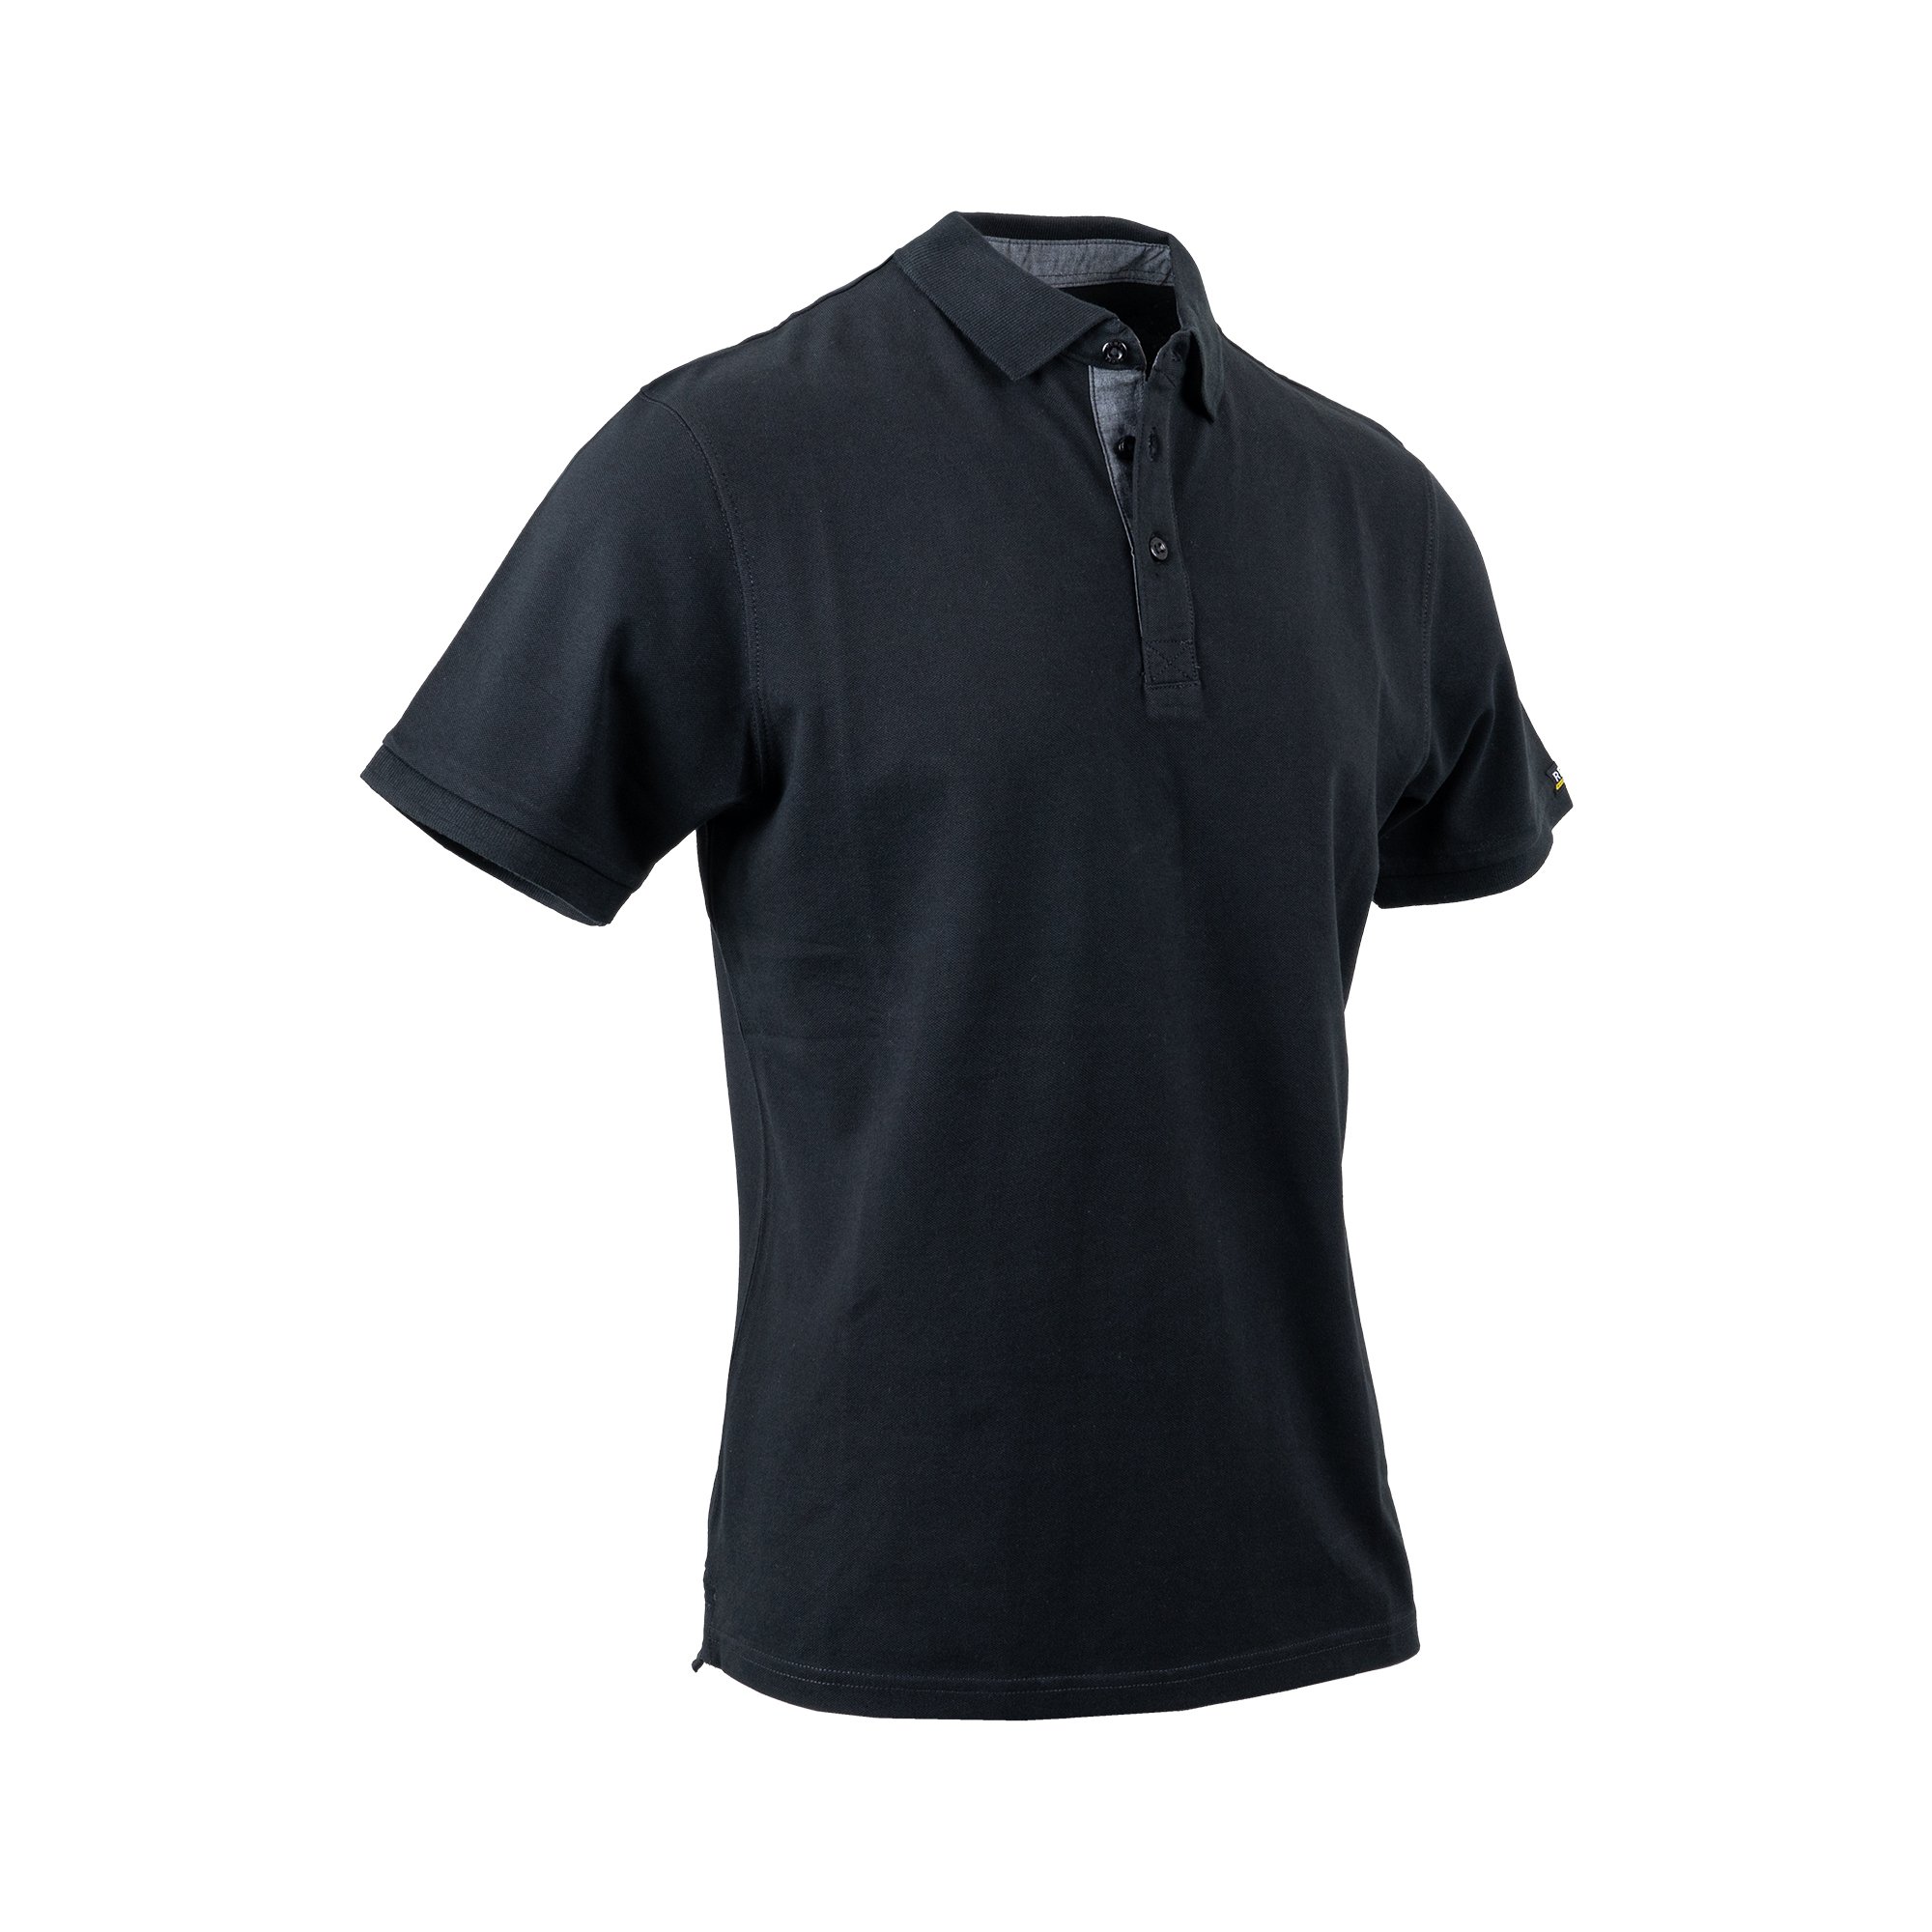 REBEL Work Wear Golf Shirt Black - REBEL Safety Gear